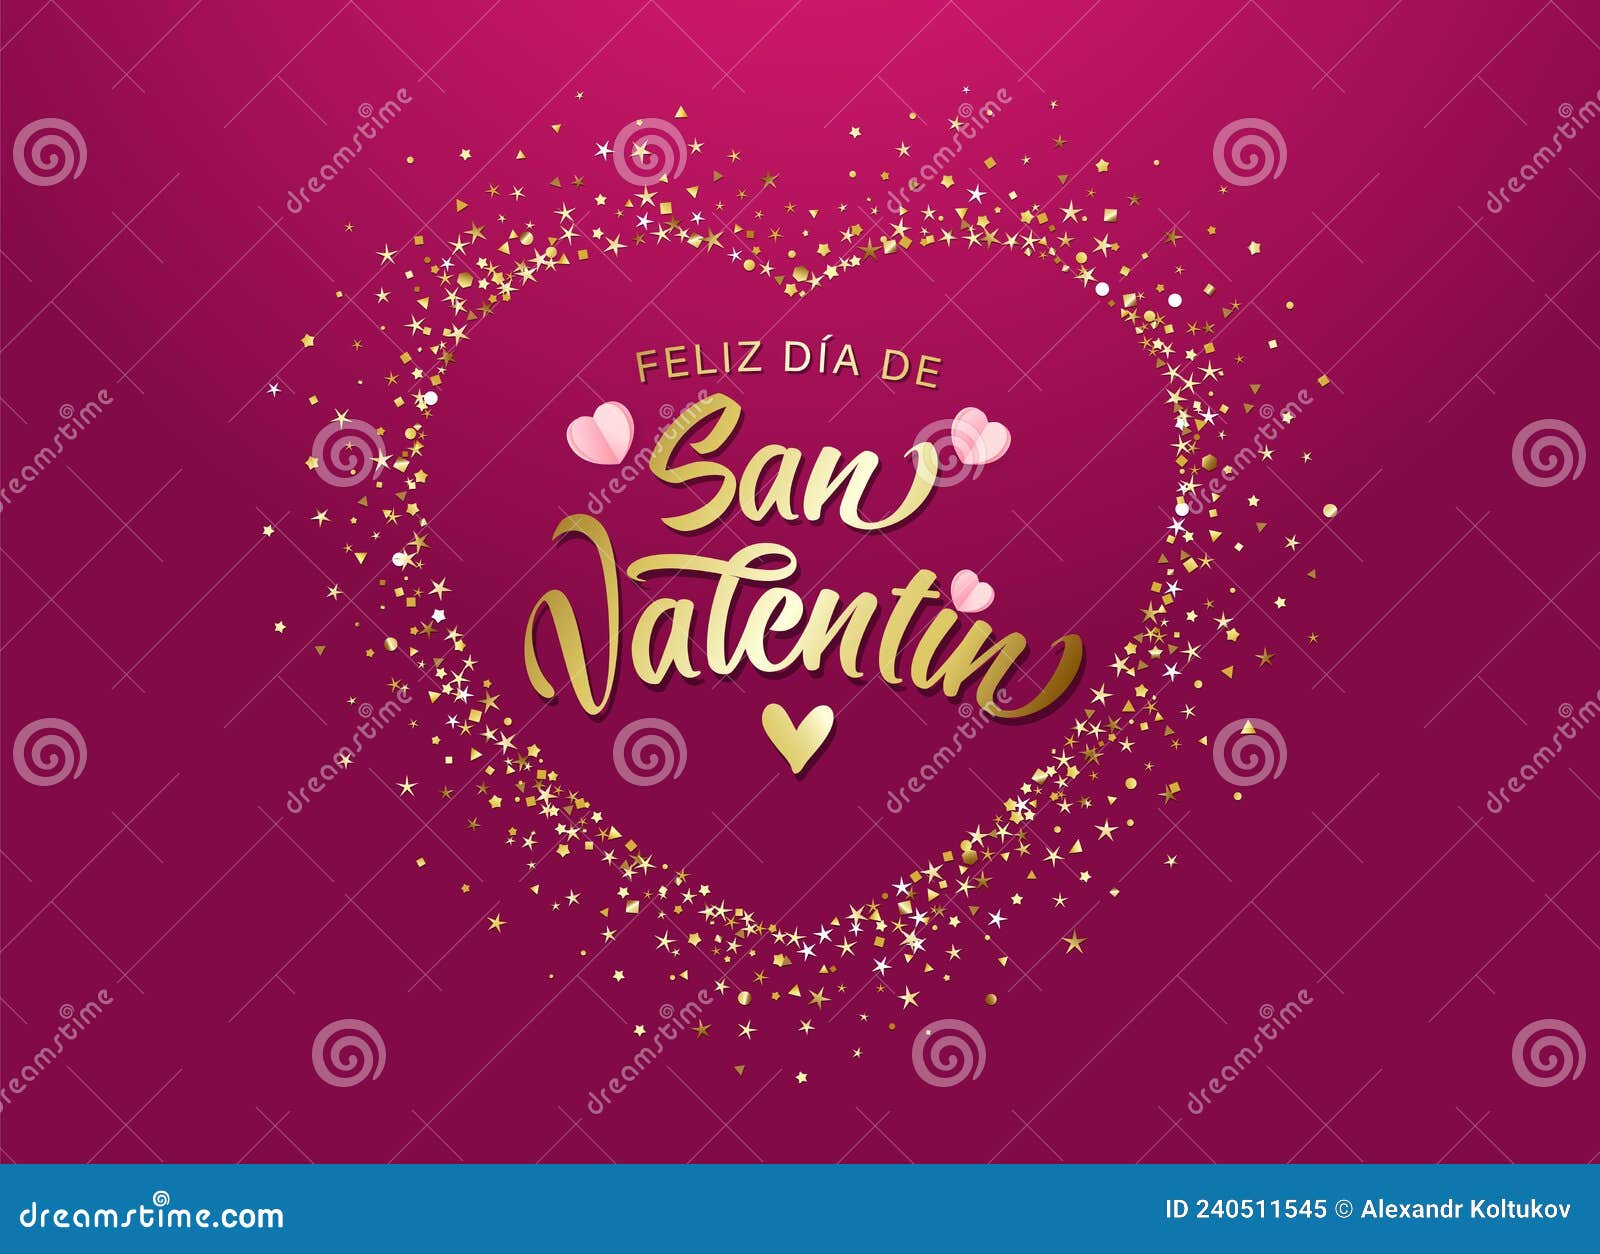 feliz dia de san valentin spanish calligraphy with golden dust heart